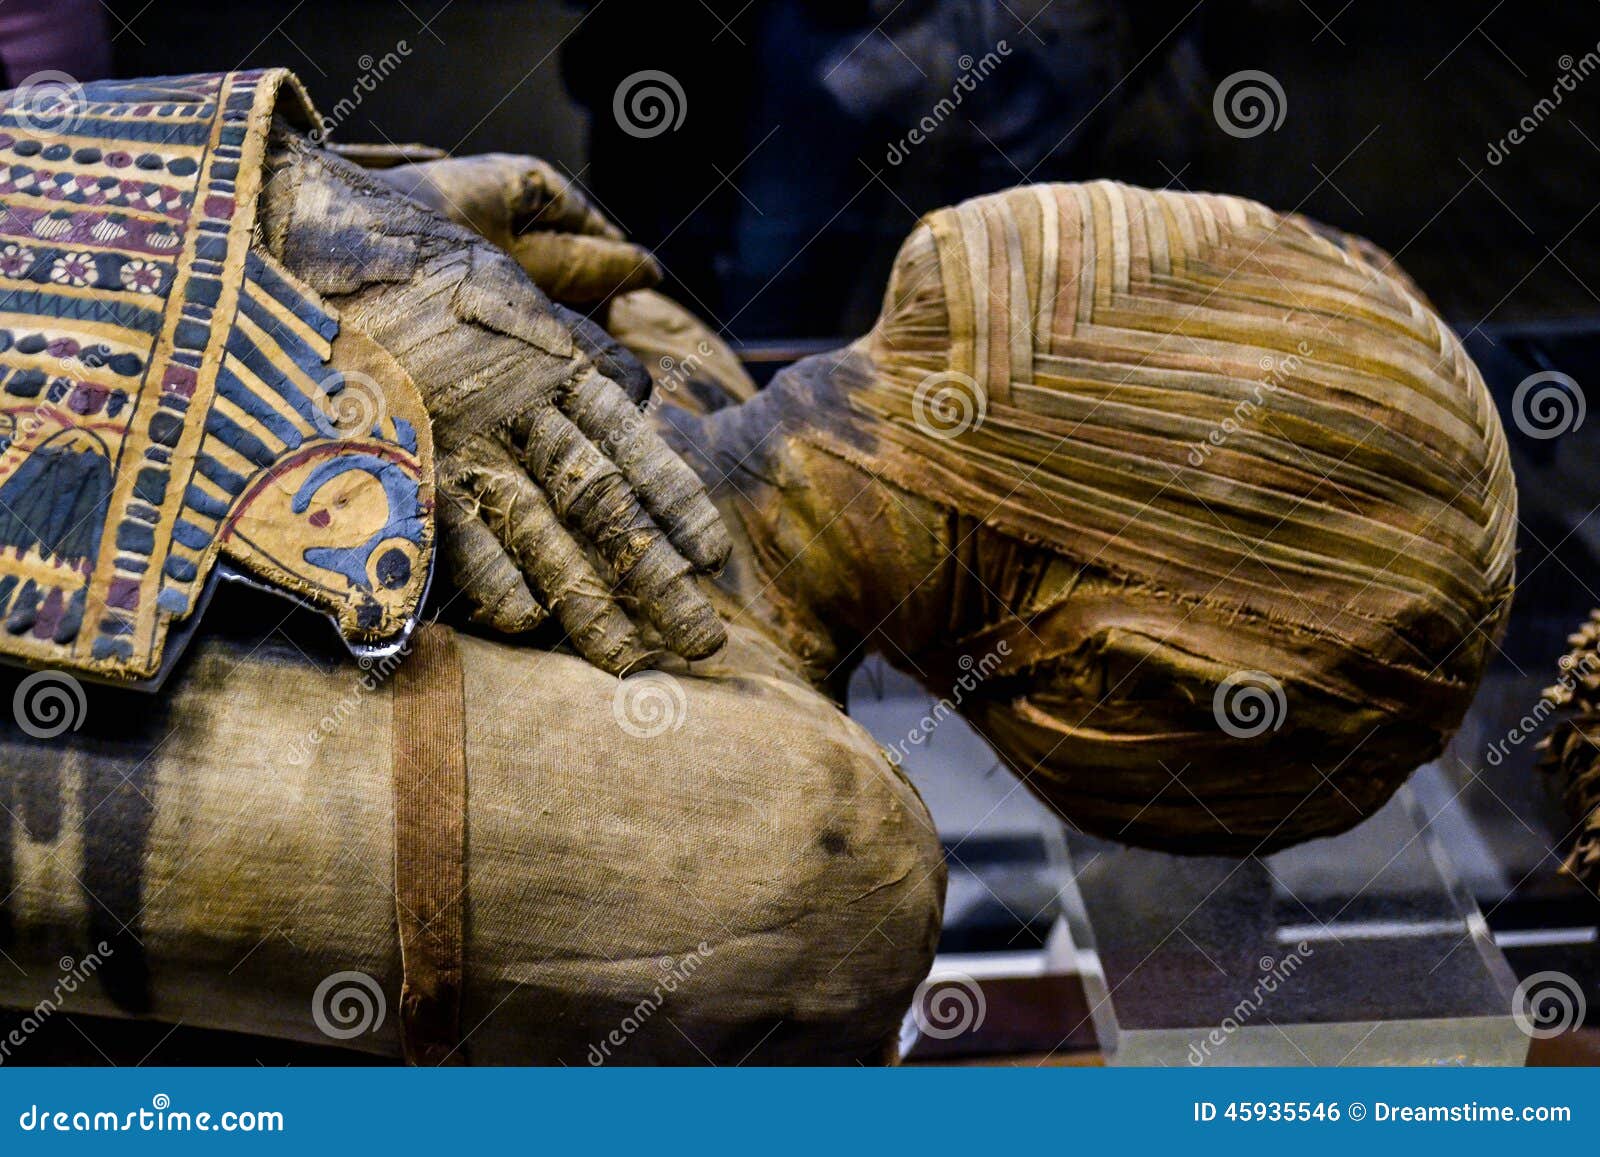 Egyptian Mummy Sarcophagus Editorial Image 24386278 